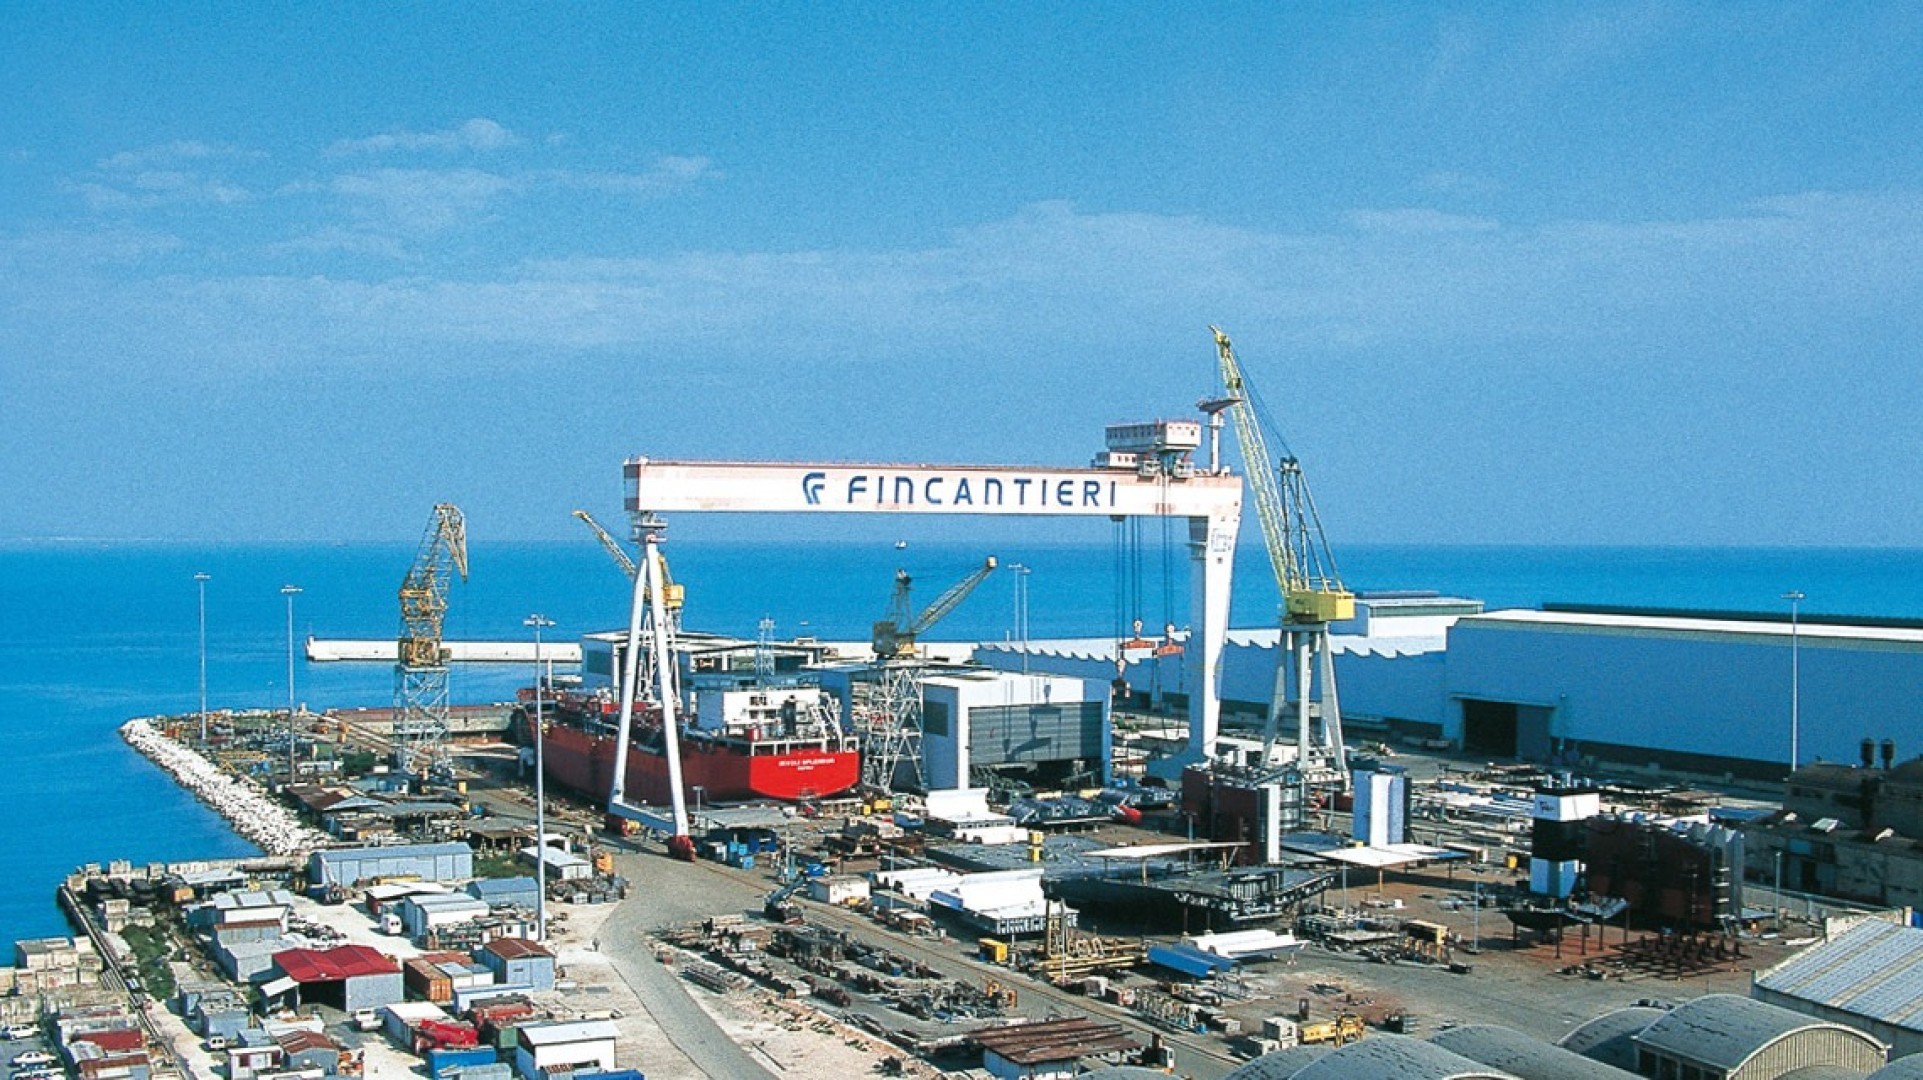 Fincantieri the Ancona plant